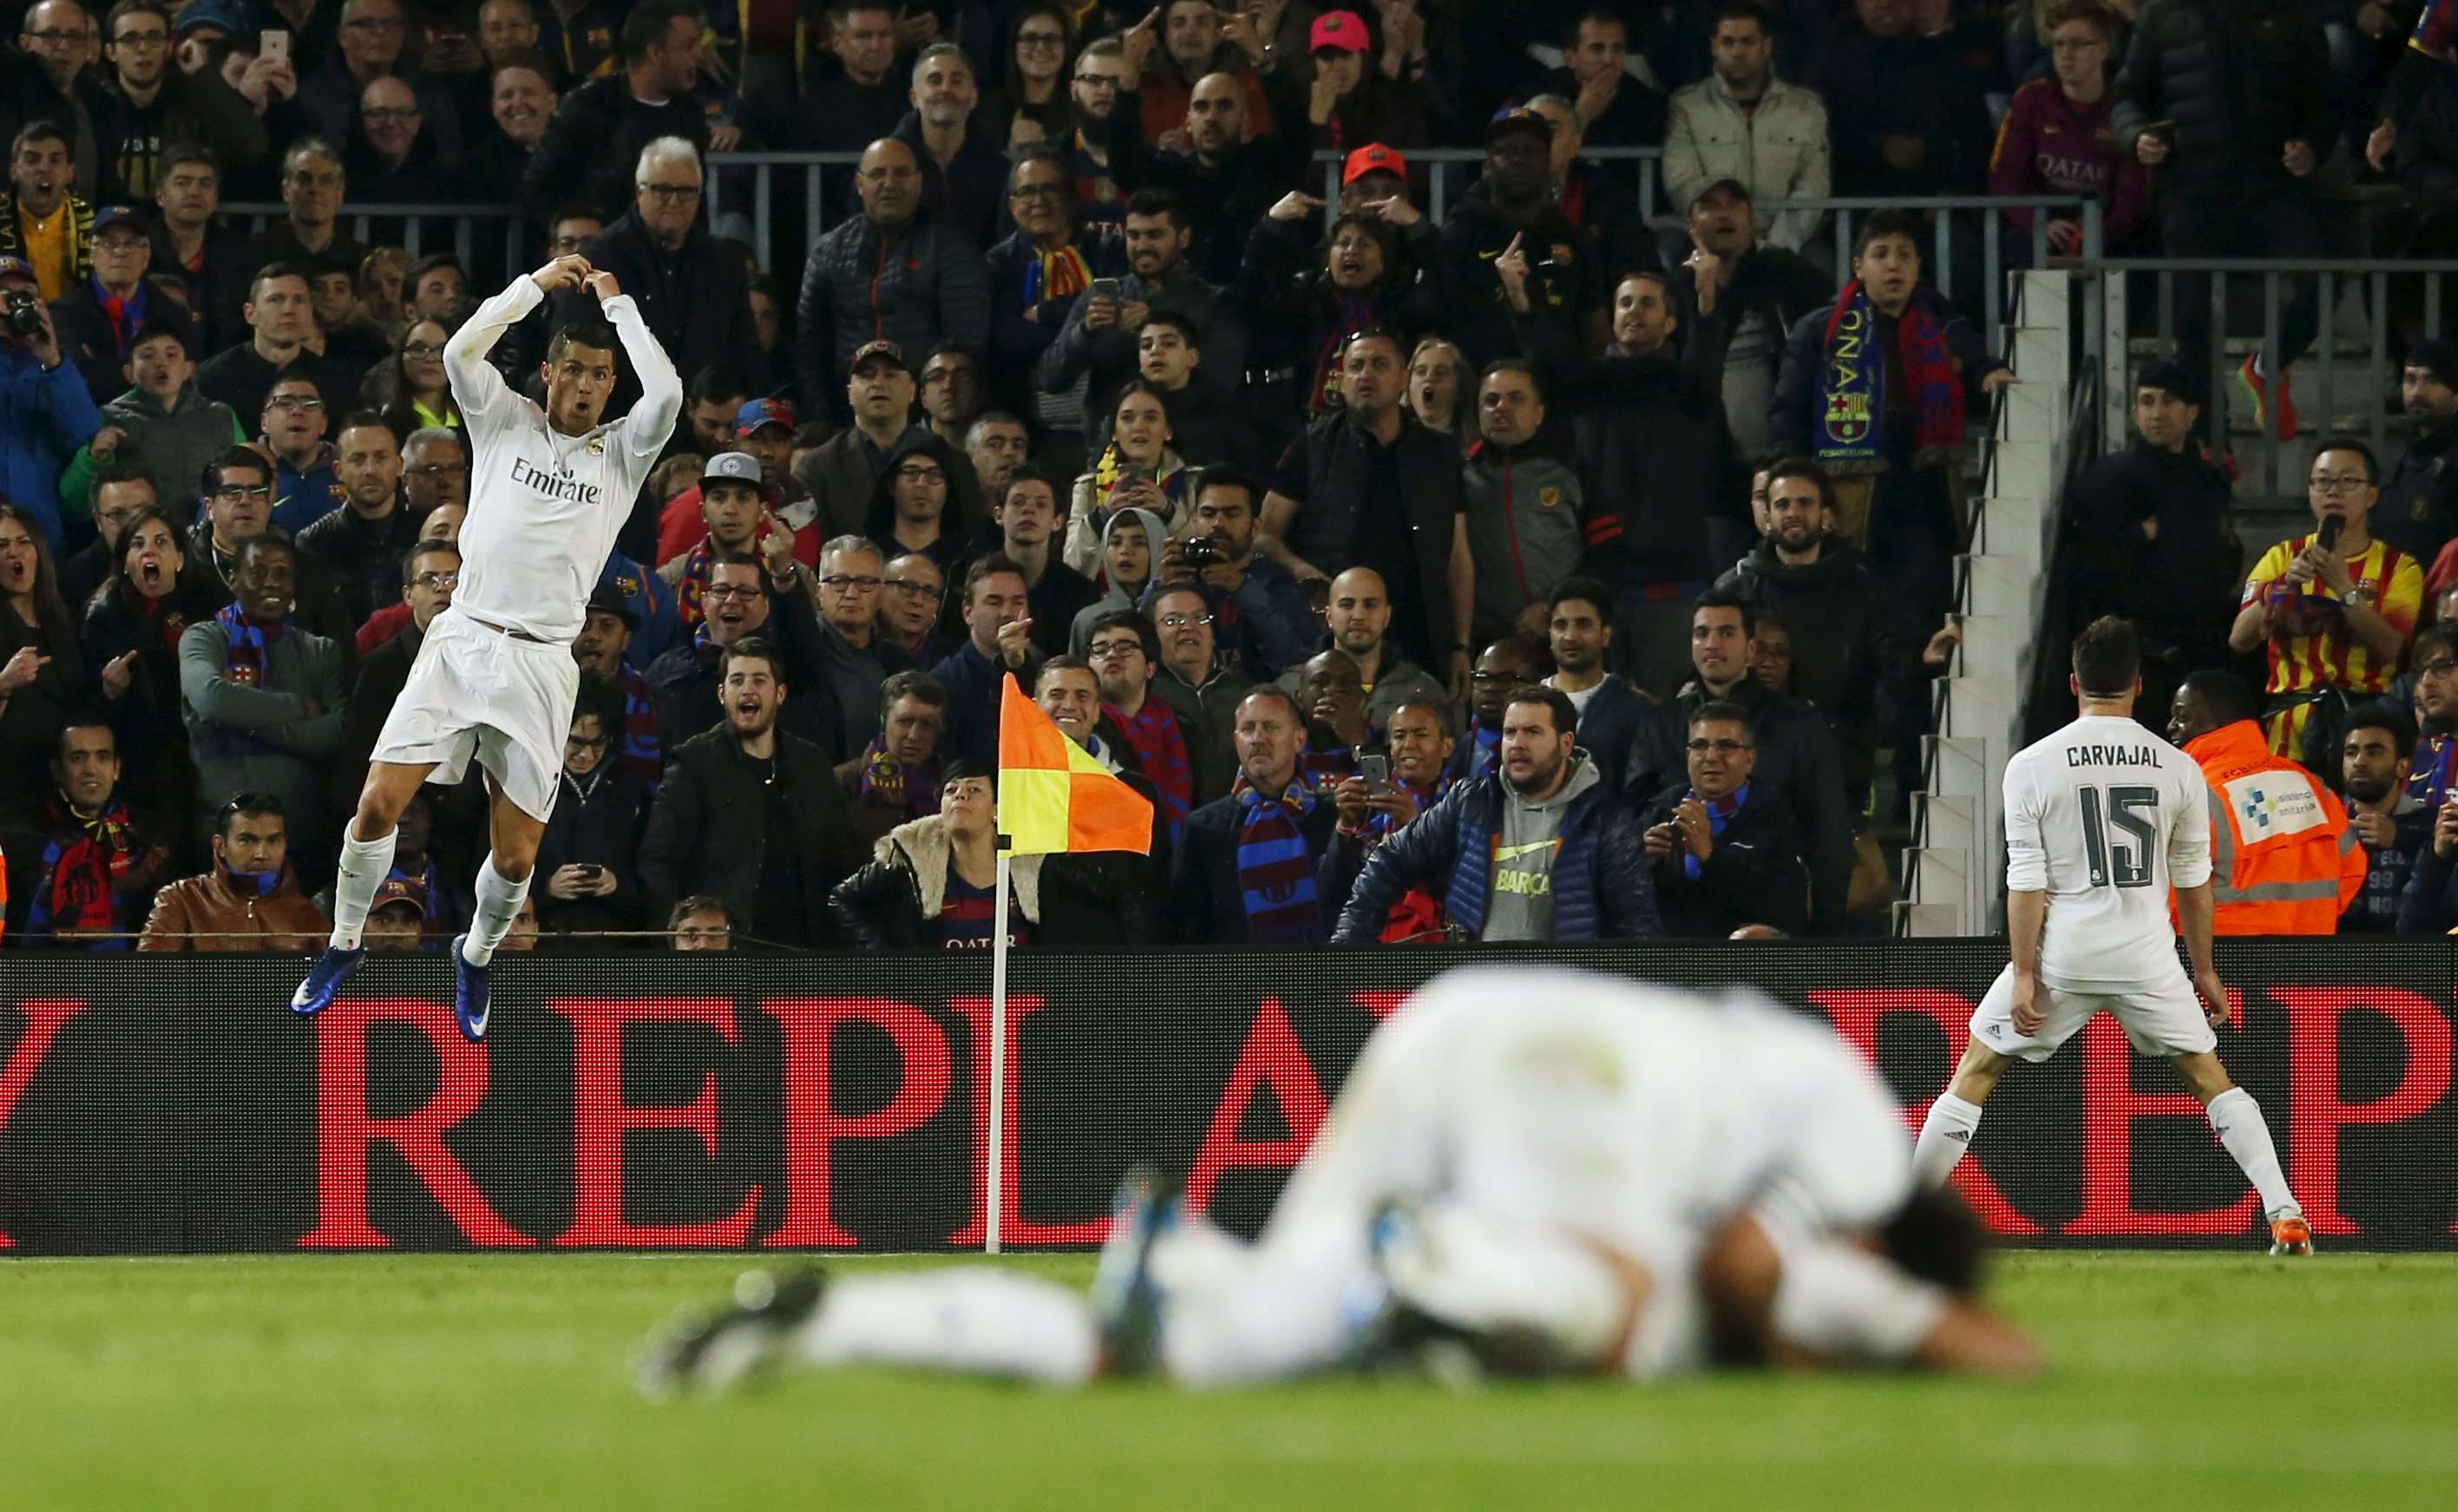 Real Madrid’s Cristiano Ronaldo celebrates netting the winning goal against Barcelona. Photo: Reuters